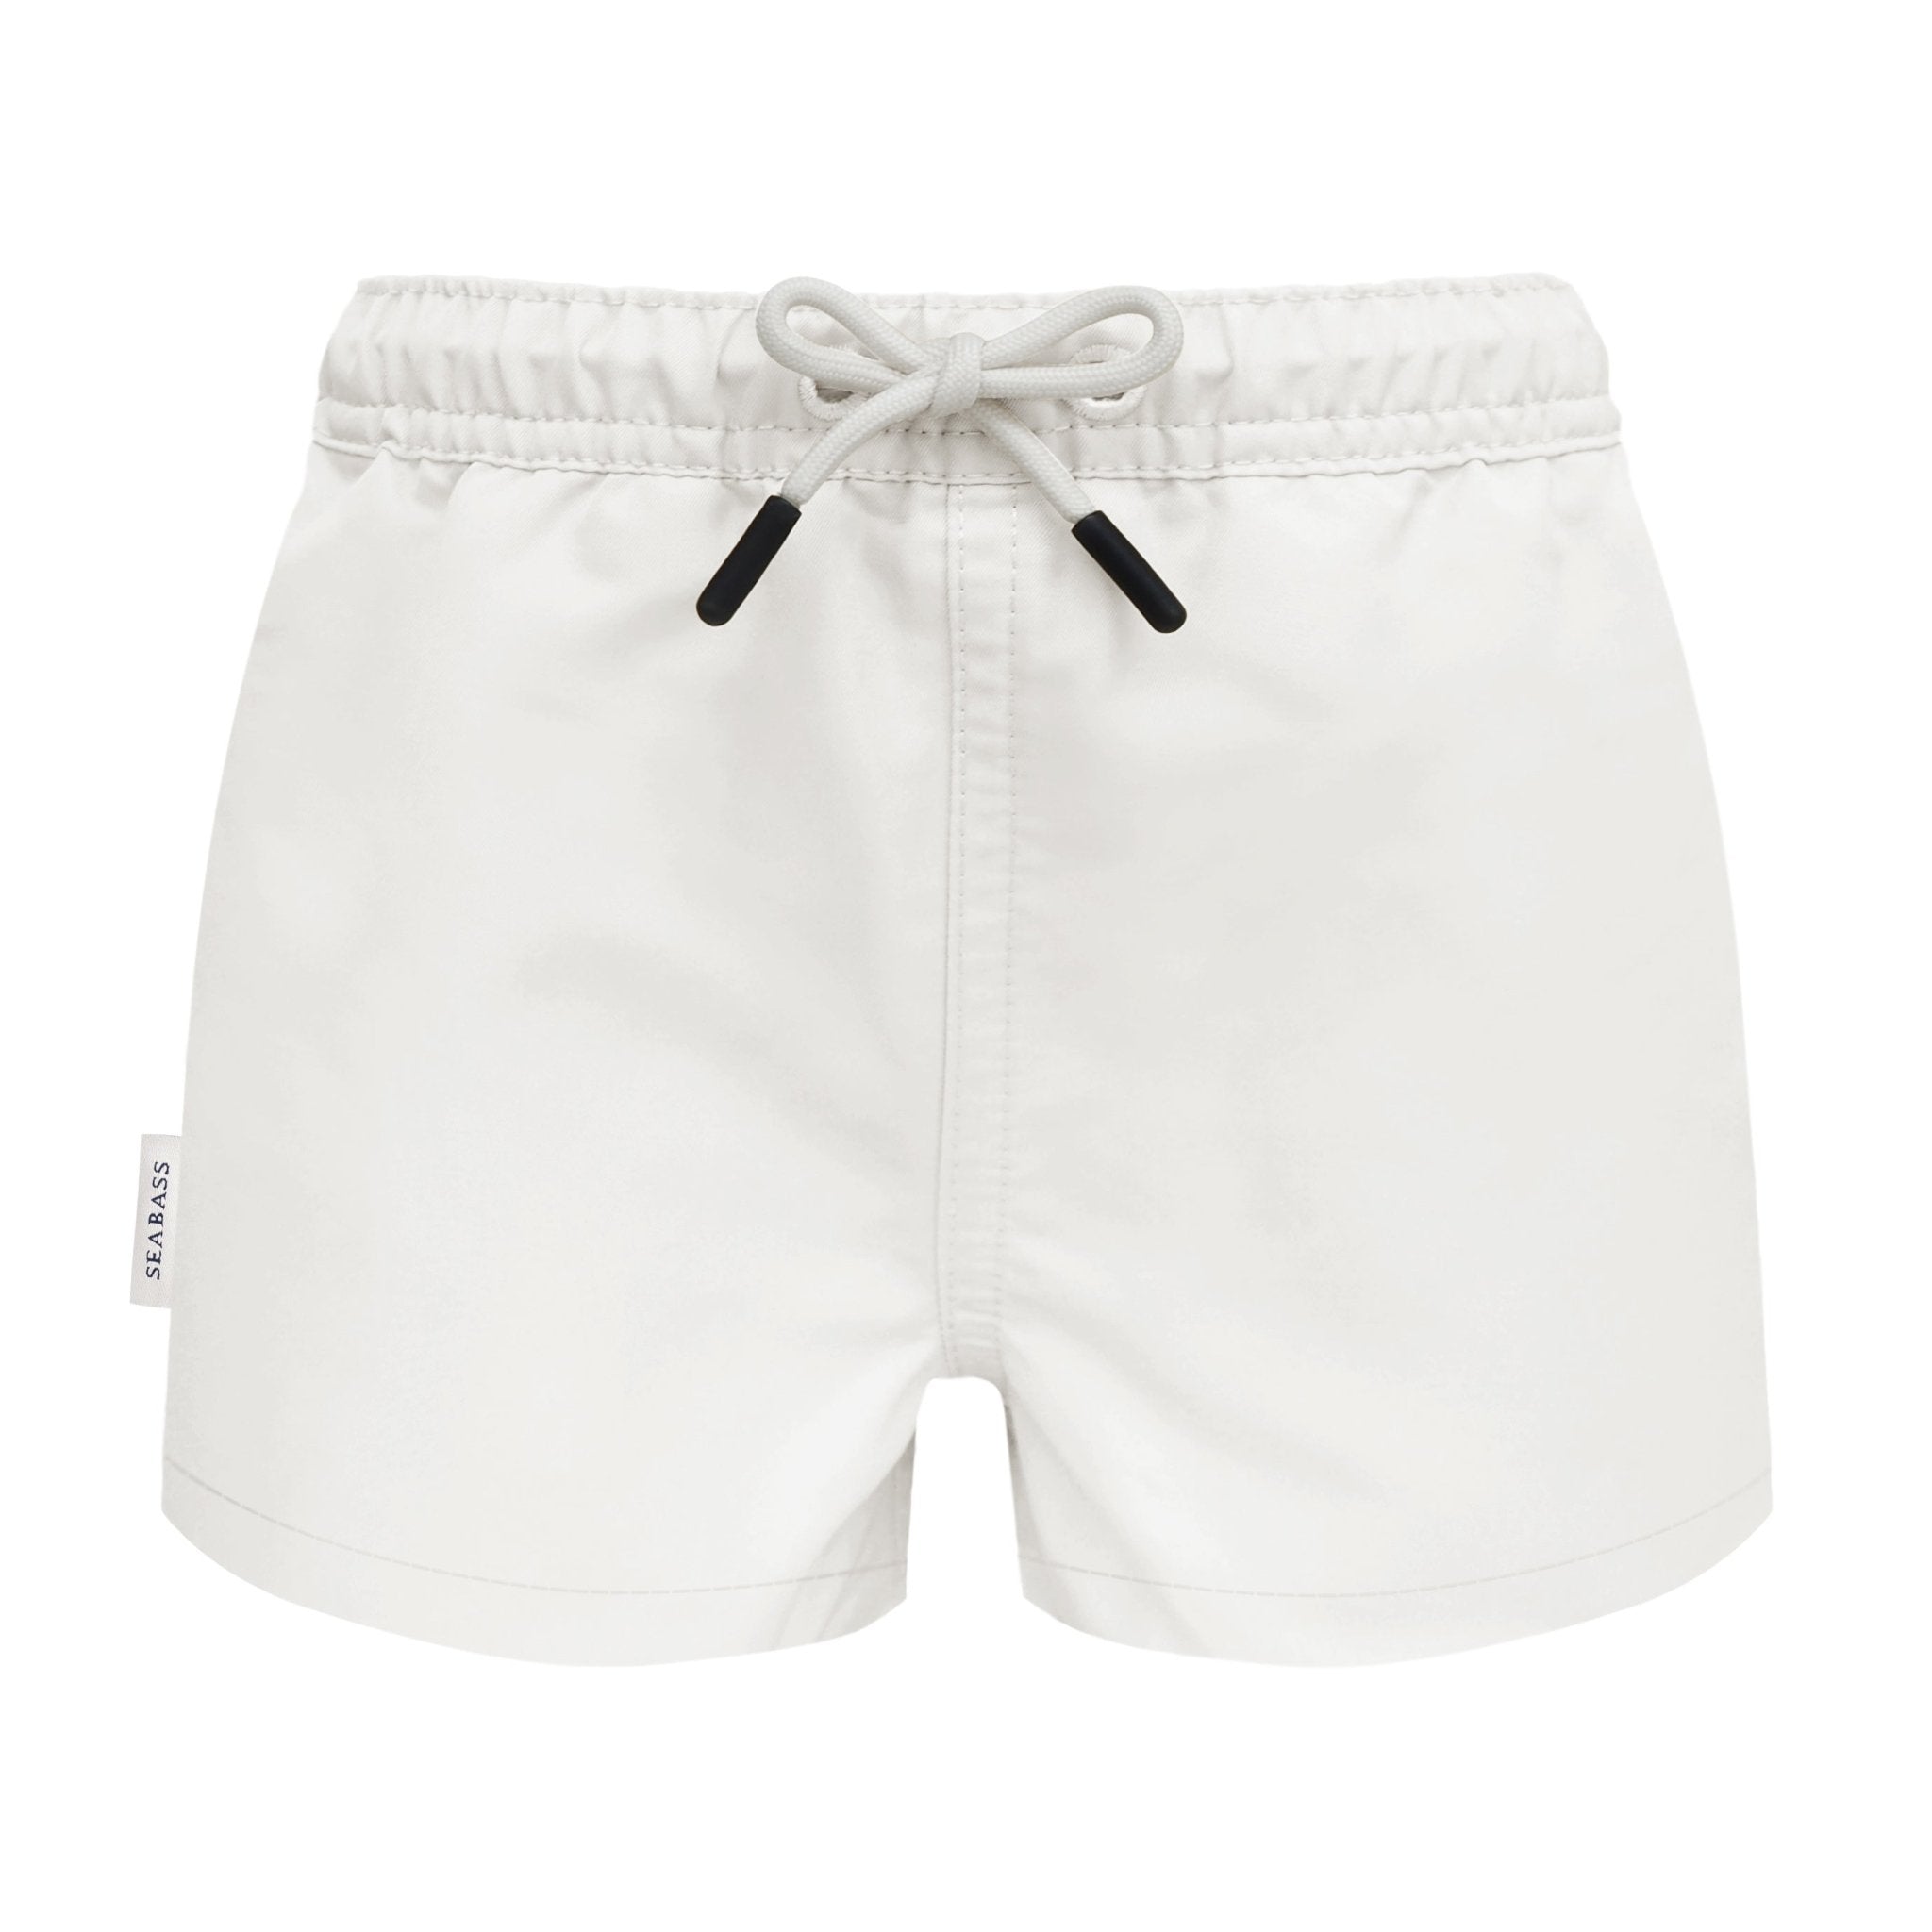 UV Swim Set - Short White and Polo Navy (UPF 50+) - SEABASS official